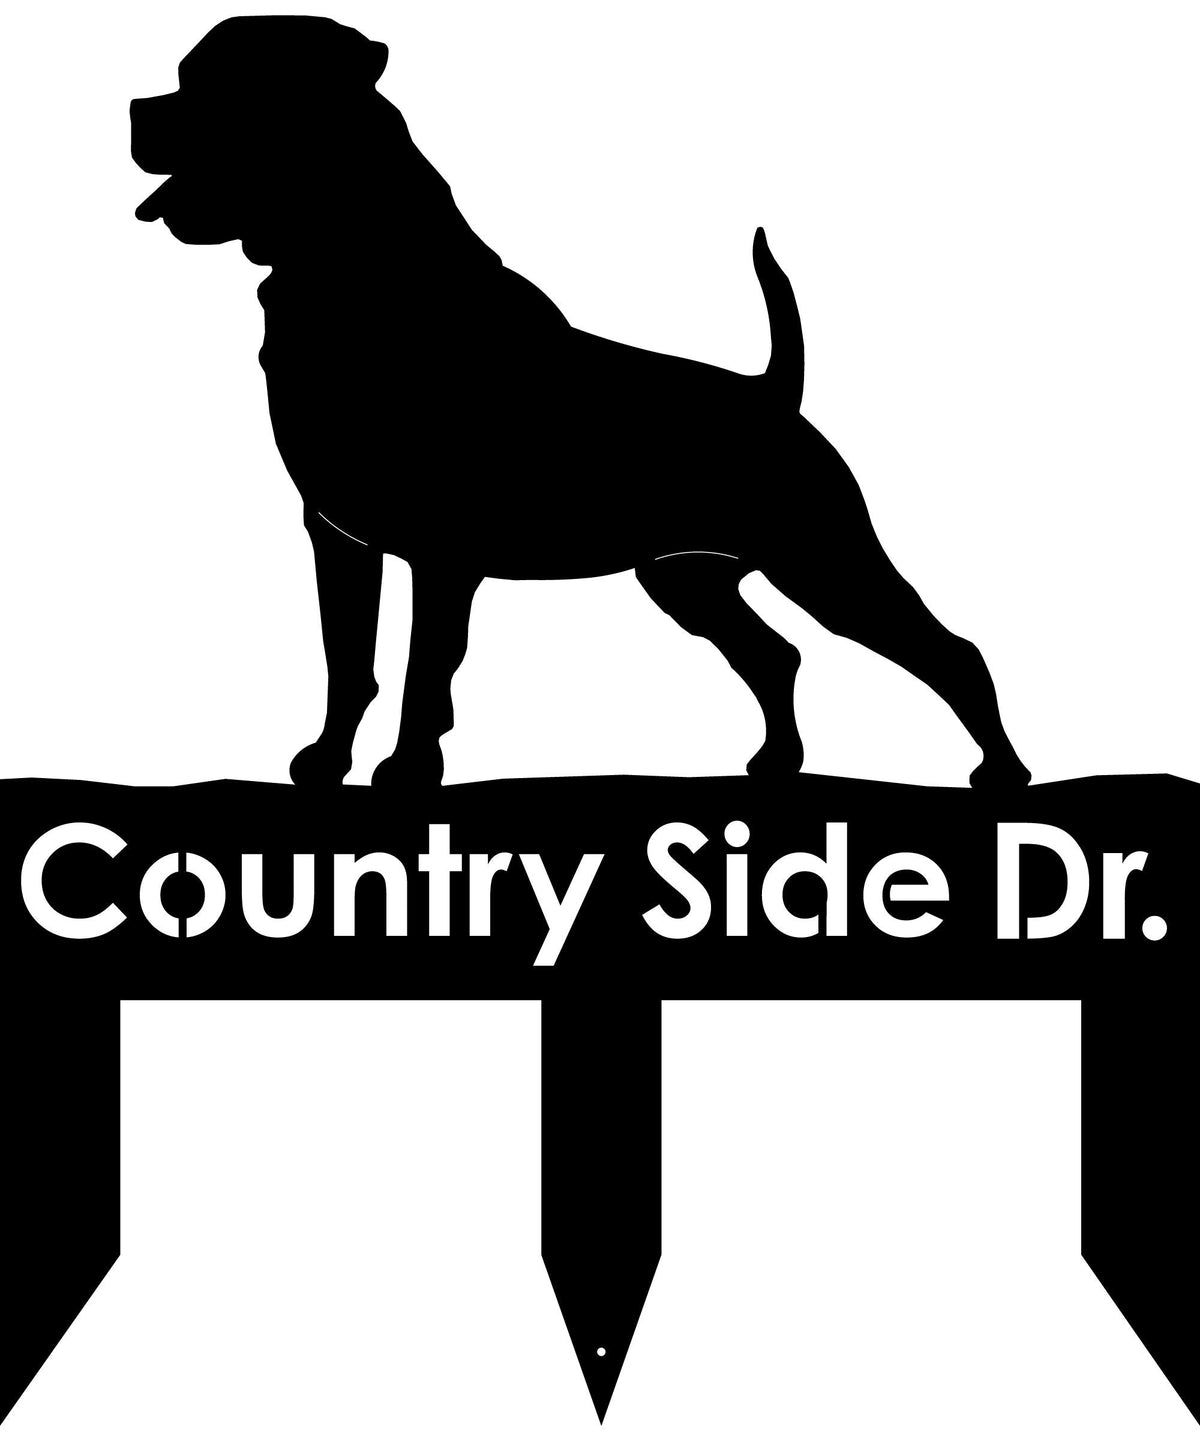 Rottweiler dog address stake